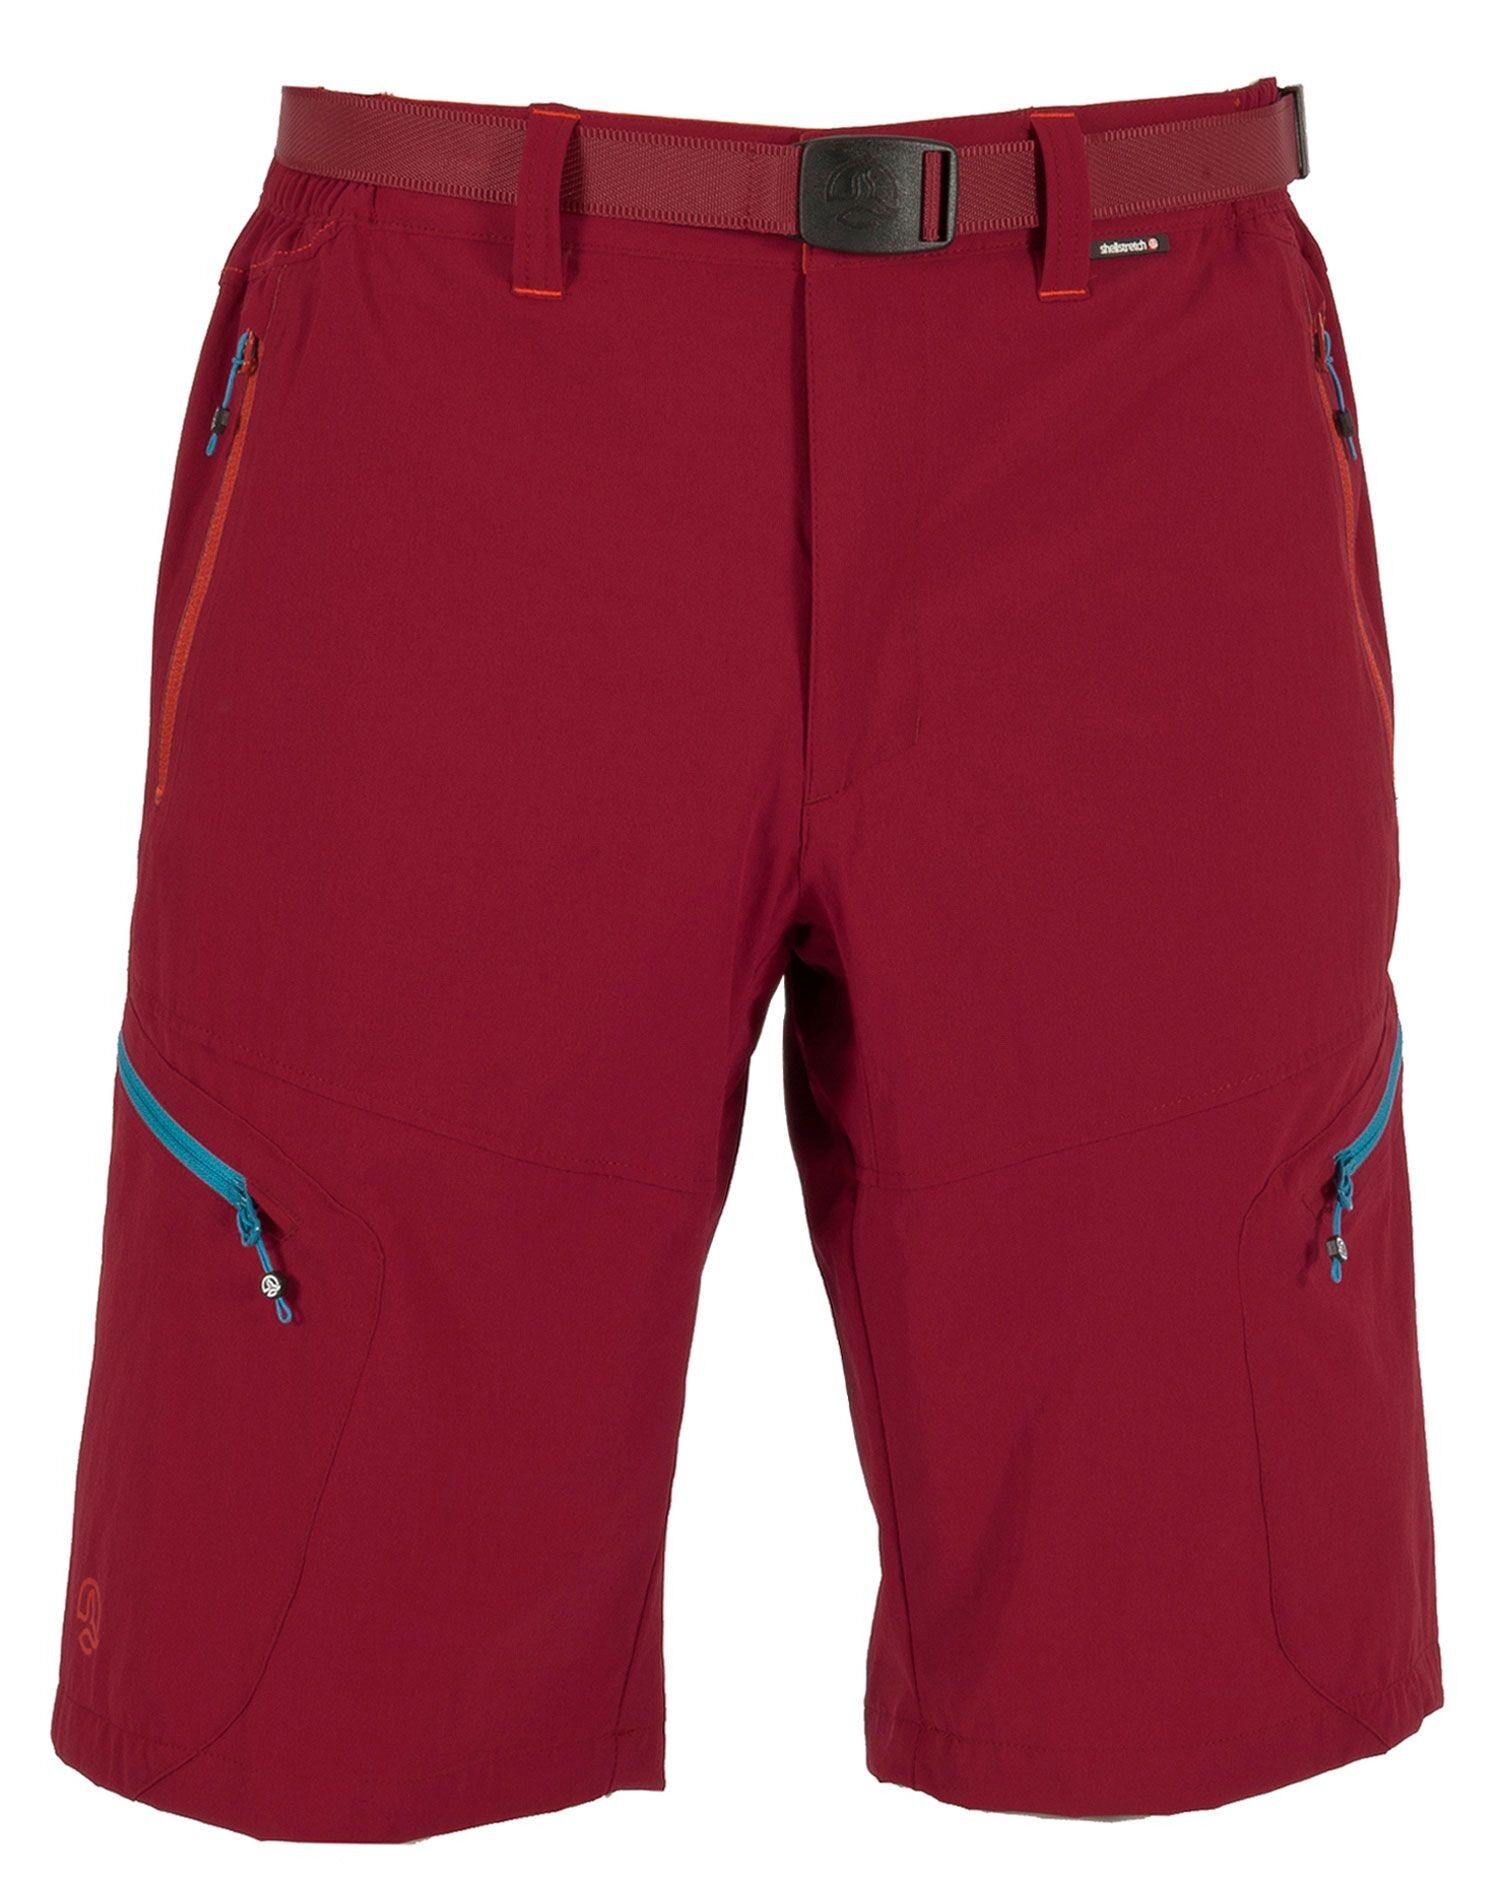 Ternua - Kross Bermuda M - Hiking shorts - Men's